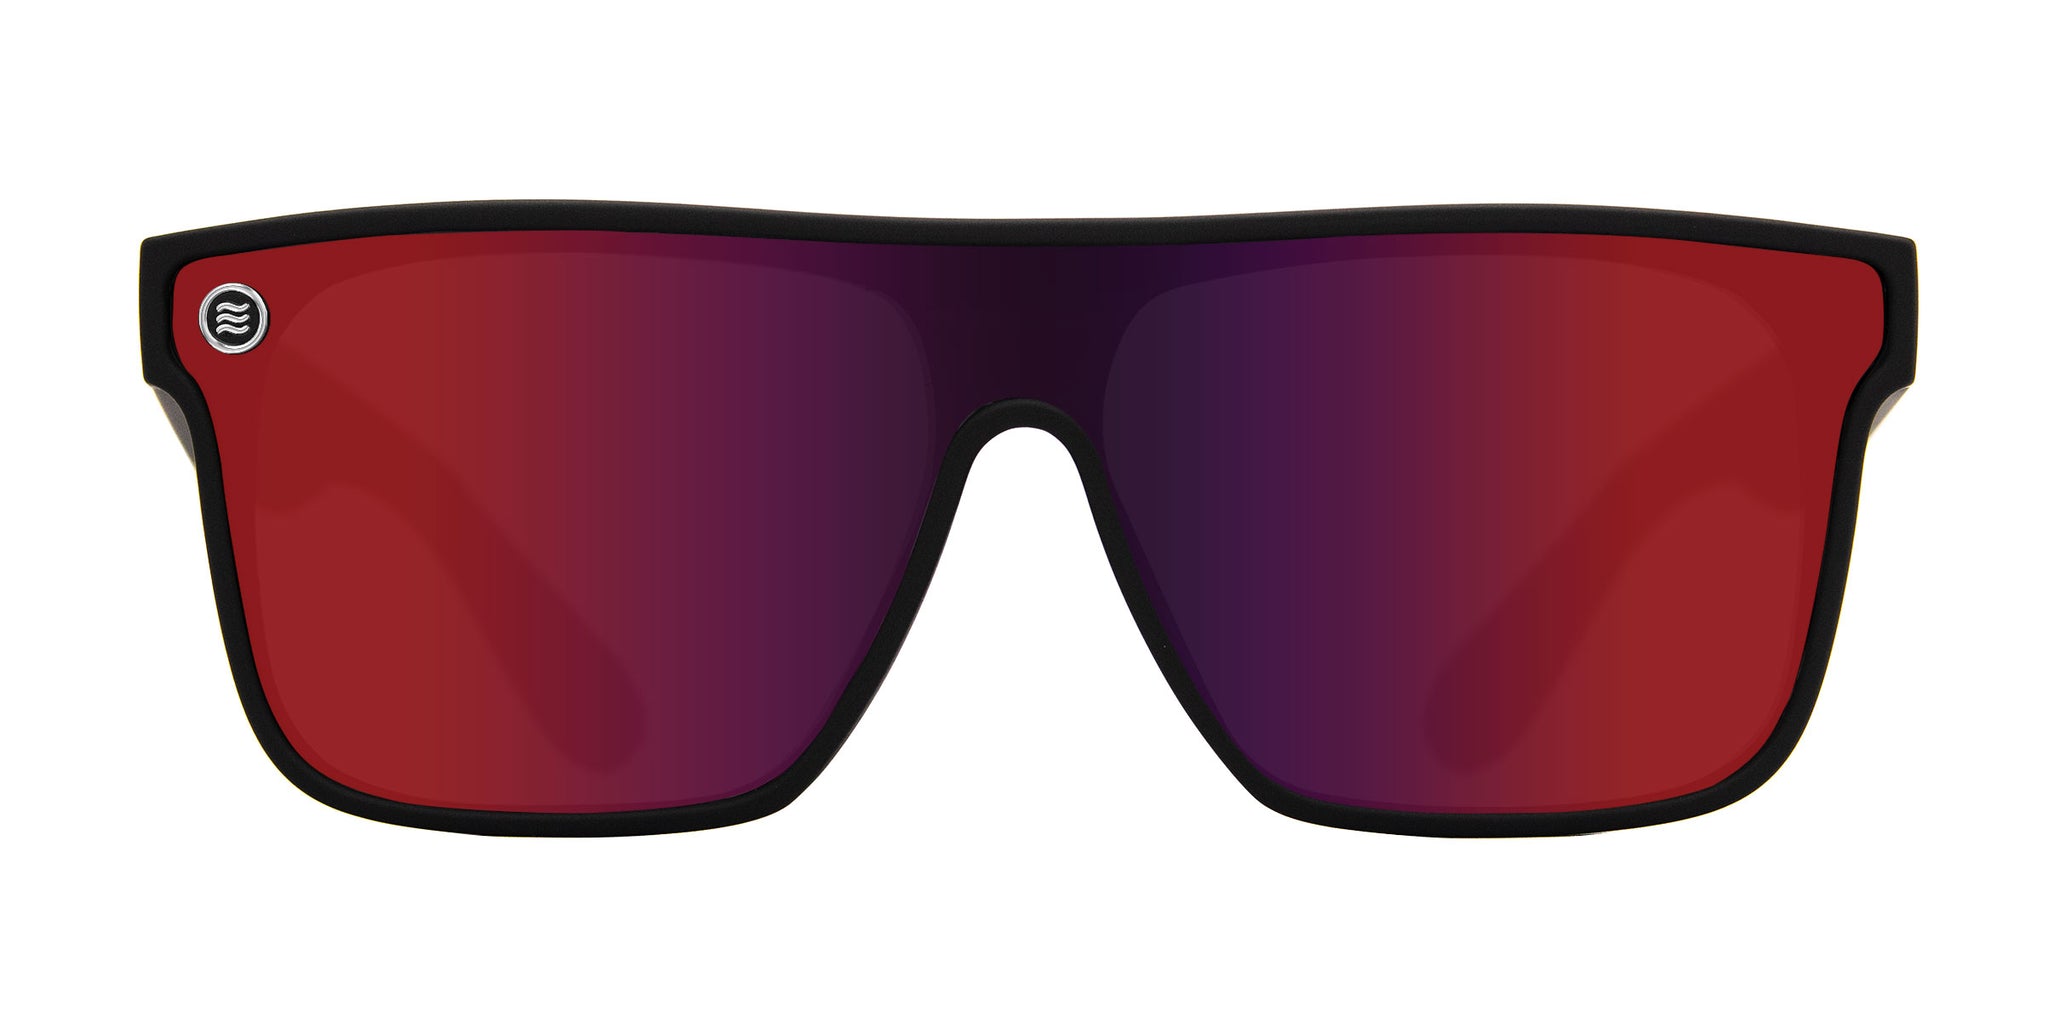 Discover 164+ cool sunglasses super hot